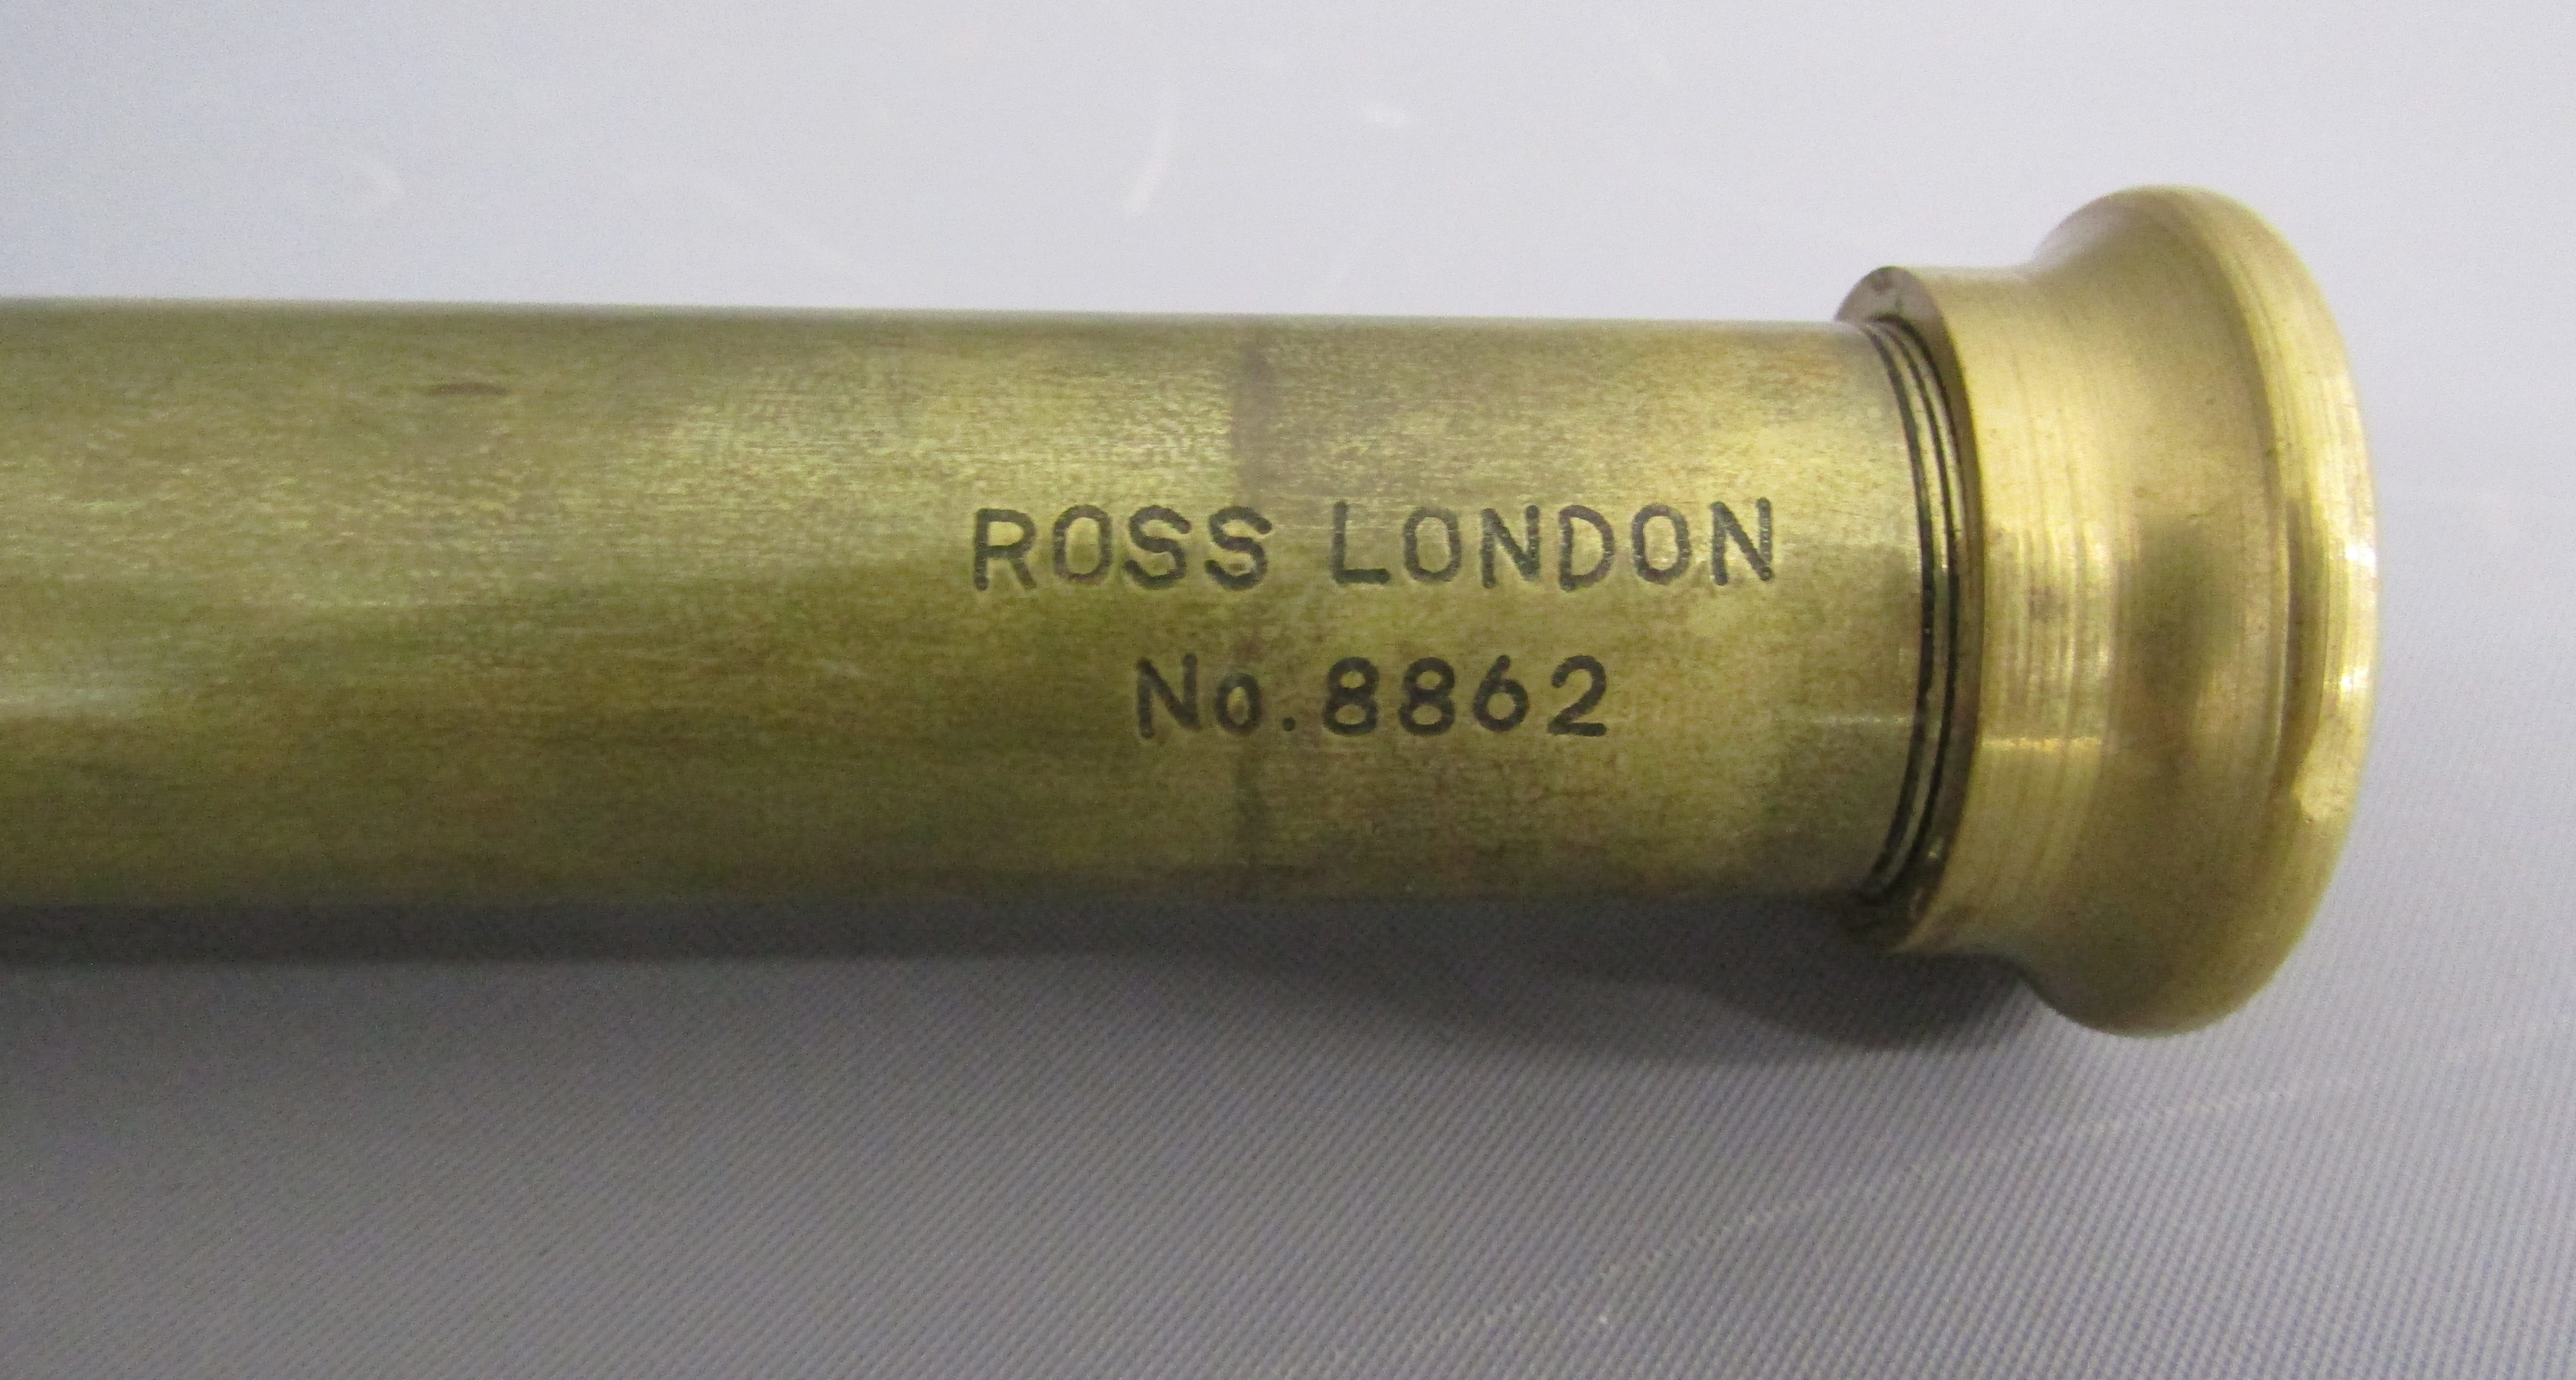 Ross London No 8862 brass telescope - Image 3 of 6